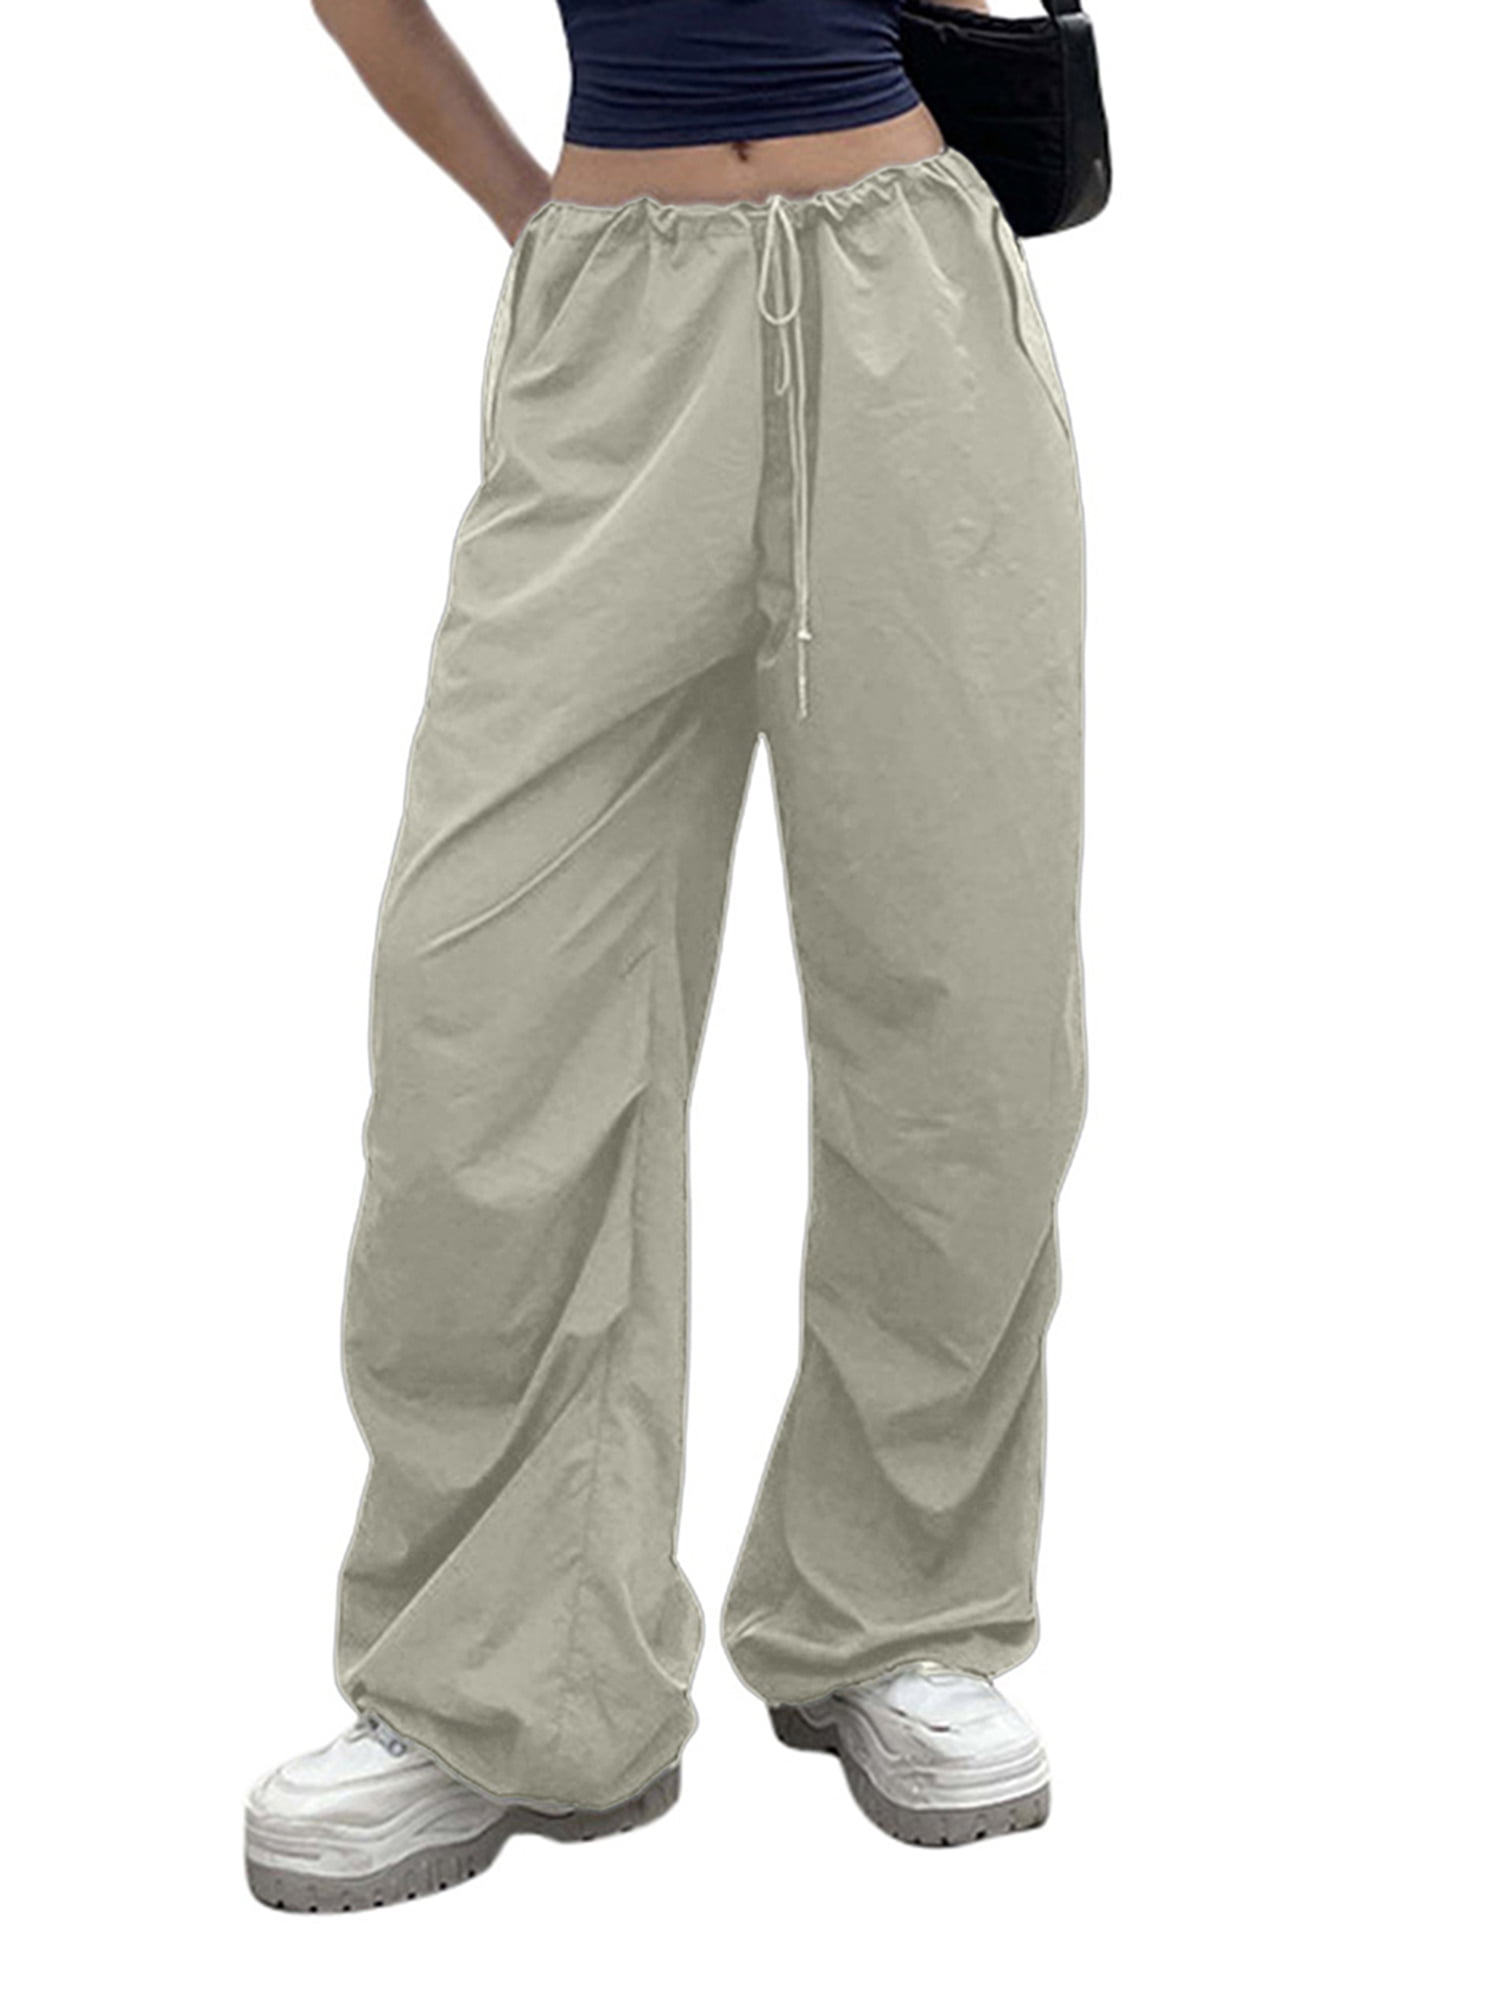 Douhoow Baggy Cargo Pants for Women Hip Hop Style Drawstring Trousers  Joggers Sweatpants Streetwear 